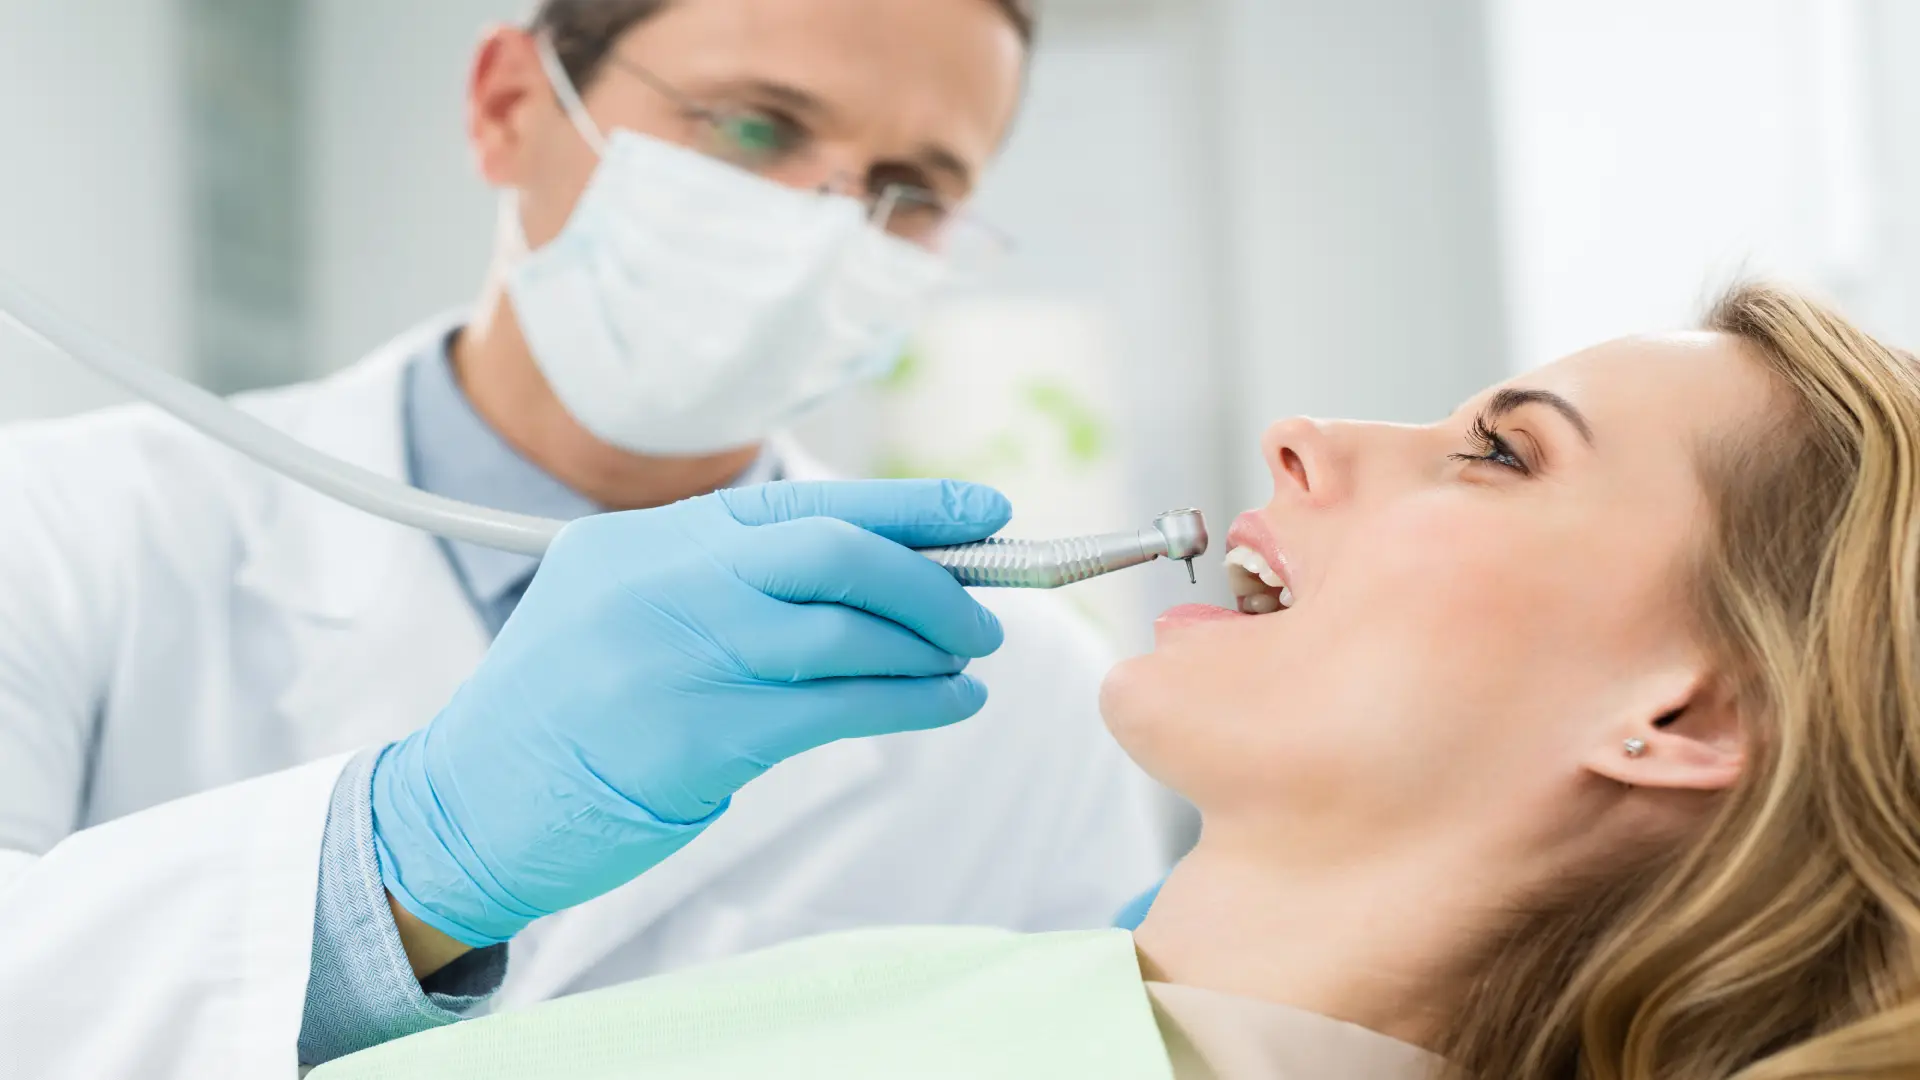 female-patient-at-dental-procedure-using-dental-dr-2022-12-16-18-15-05-utc.webp